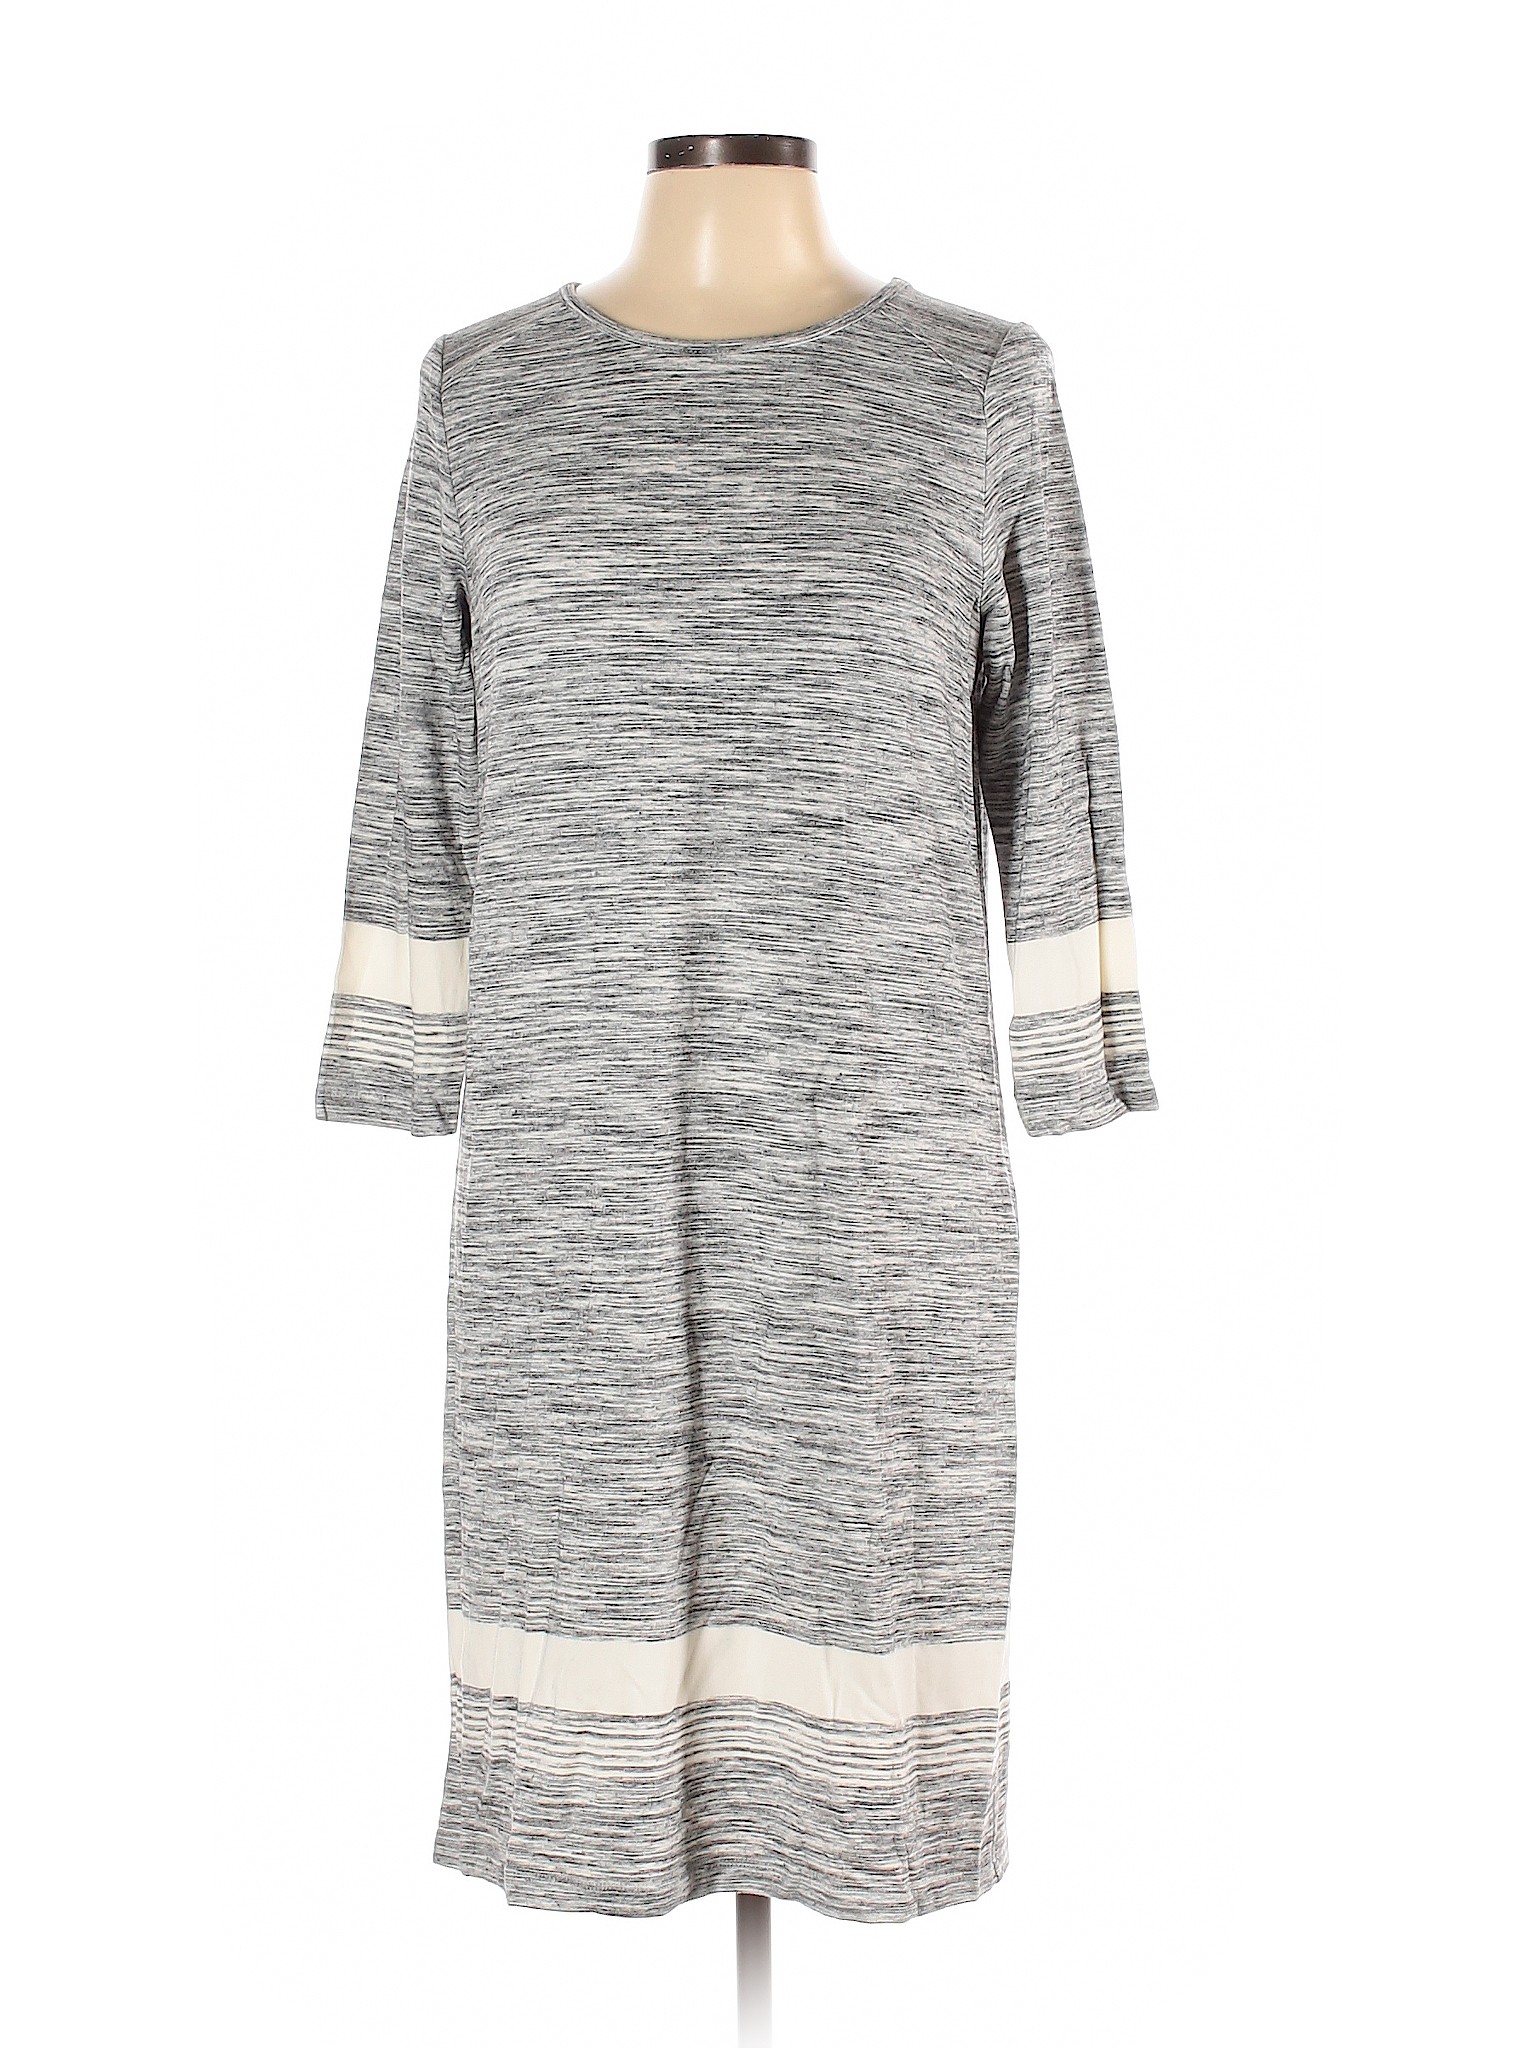 NWT Hilary Radley Women Gray Casual Dress L | eBay